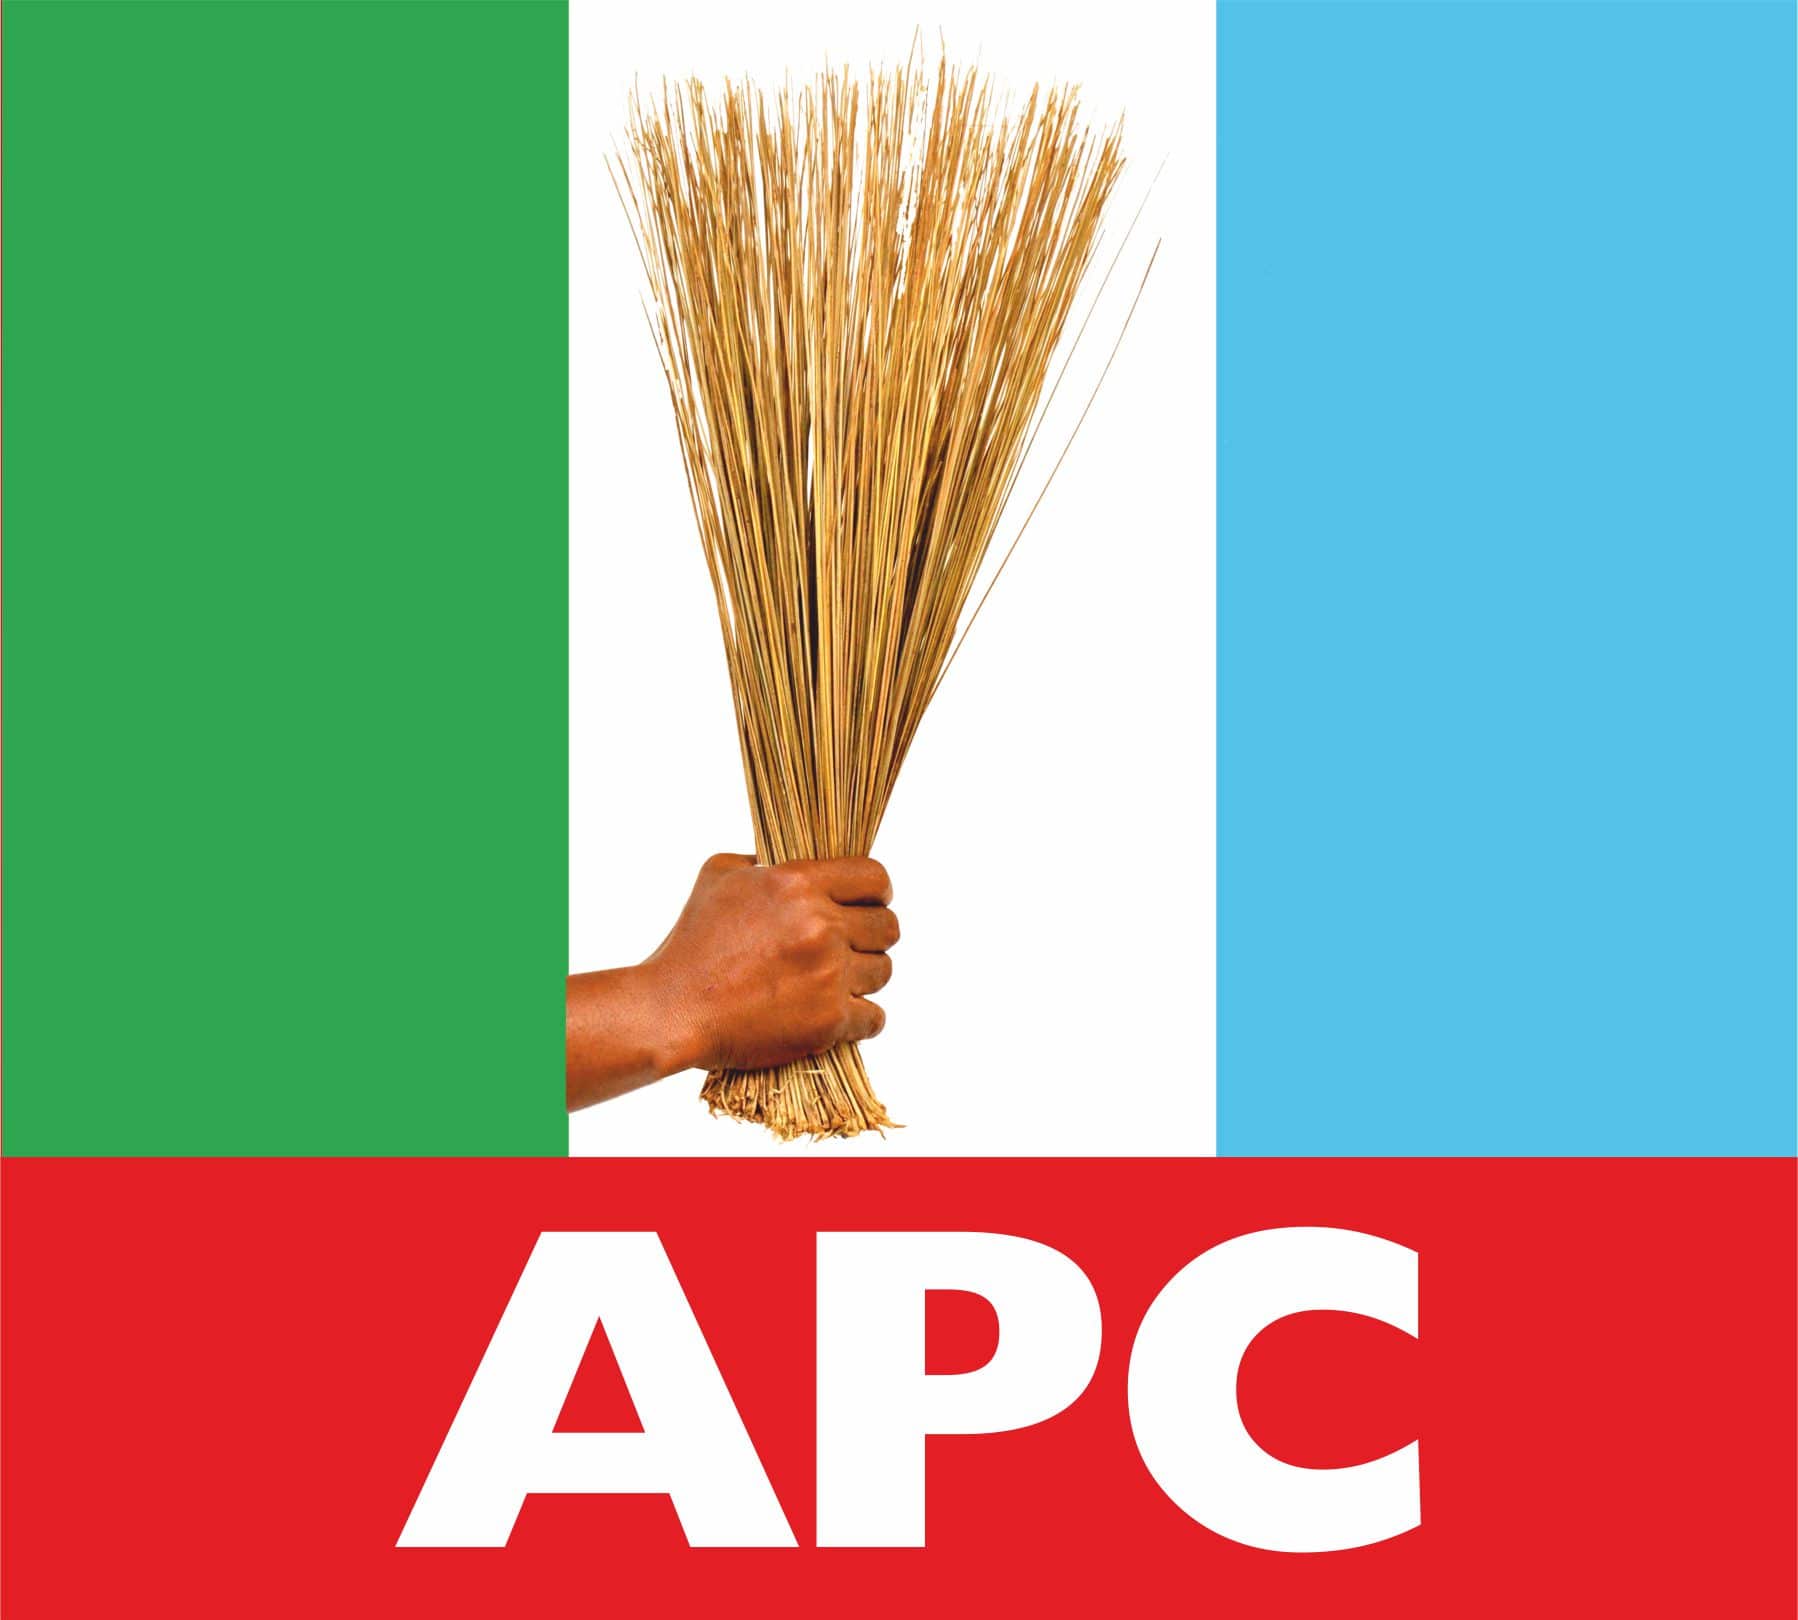 APC in Enugu Applaud Nigeria’s Image abroad